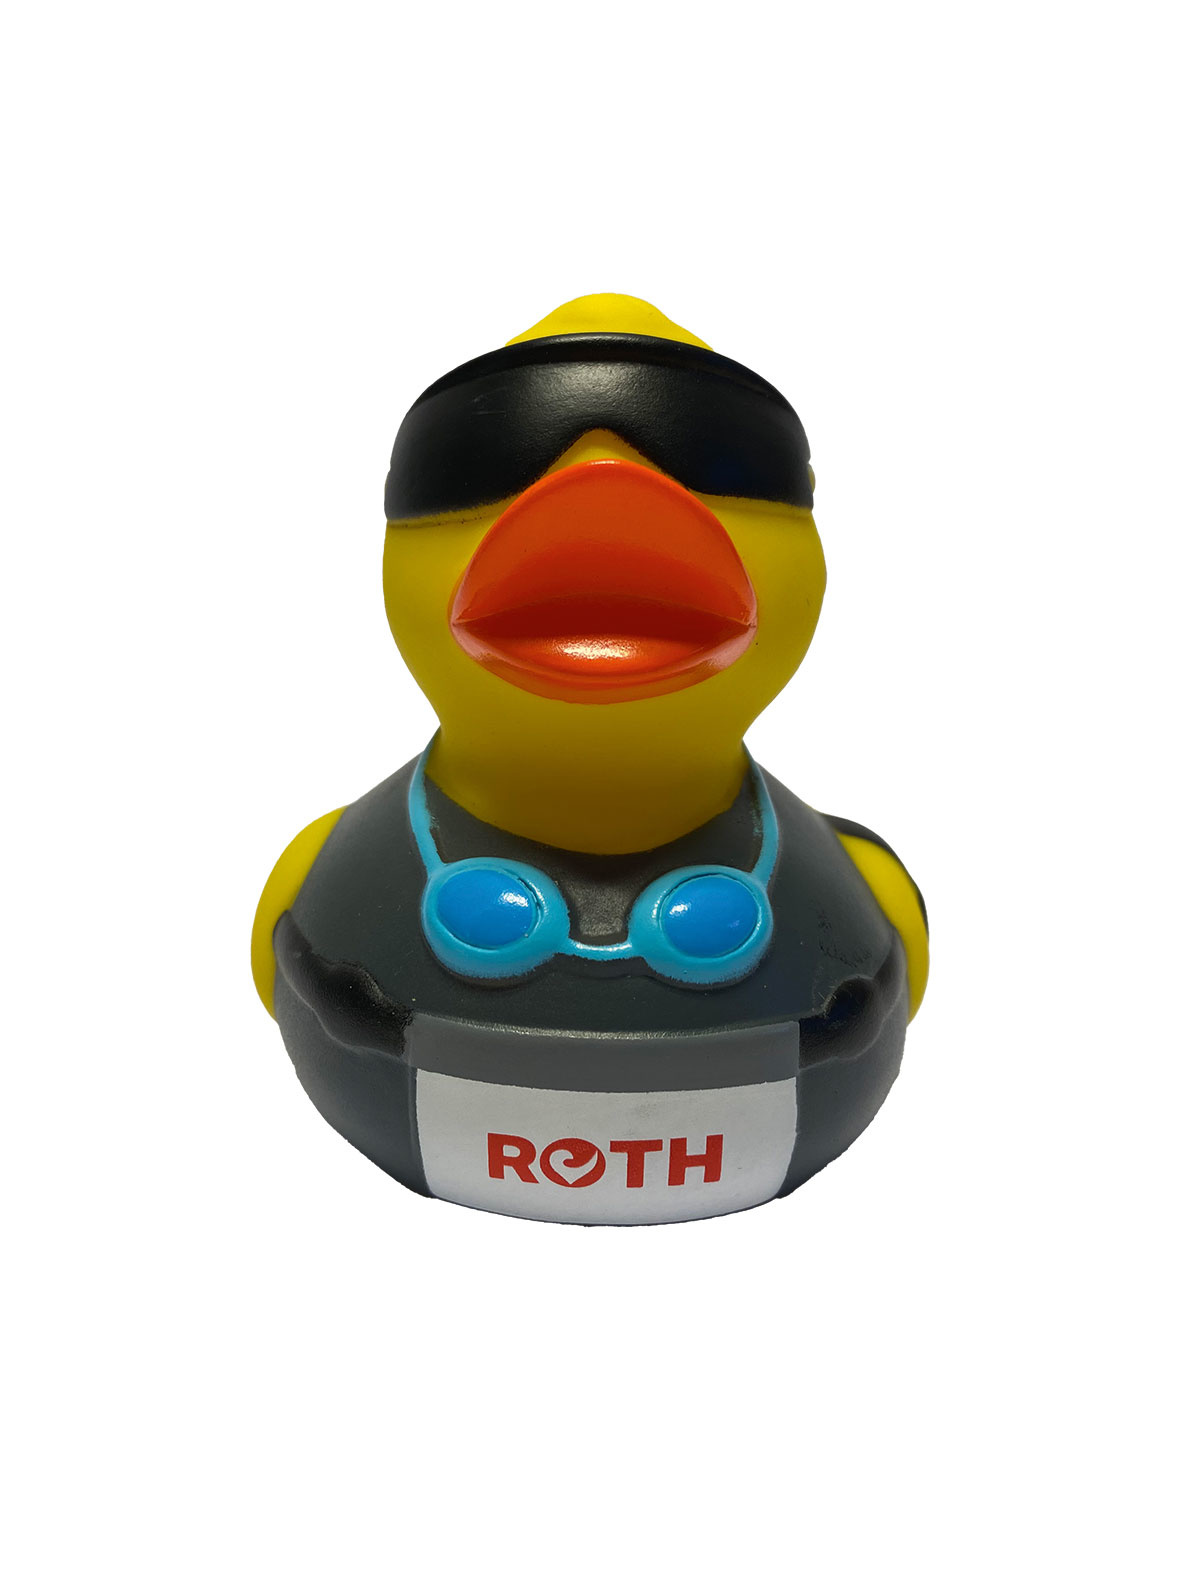 Squeaky duck ROTH Triathlon Challenge Roth-1